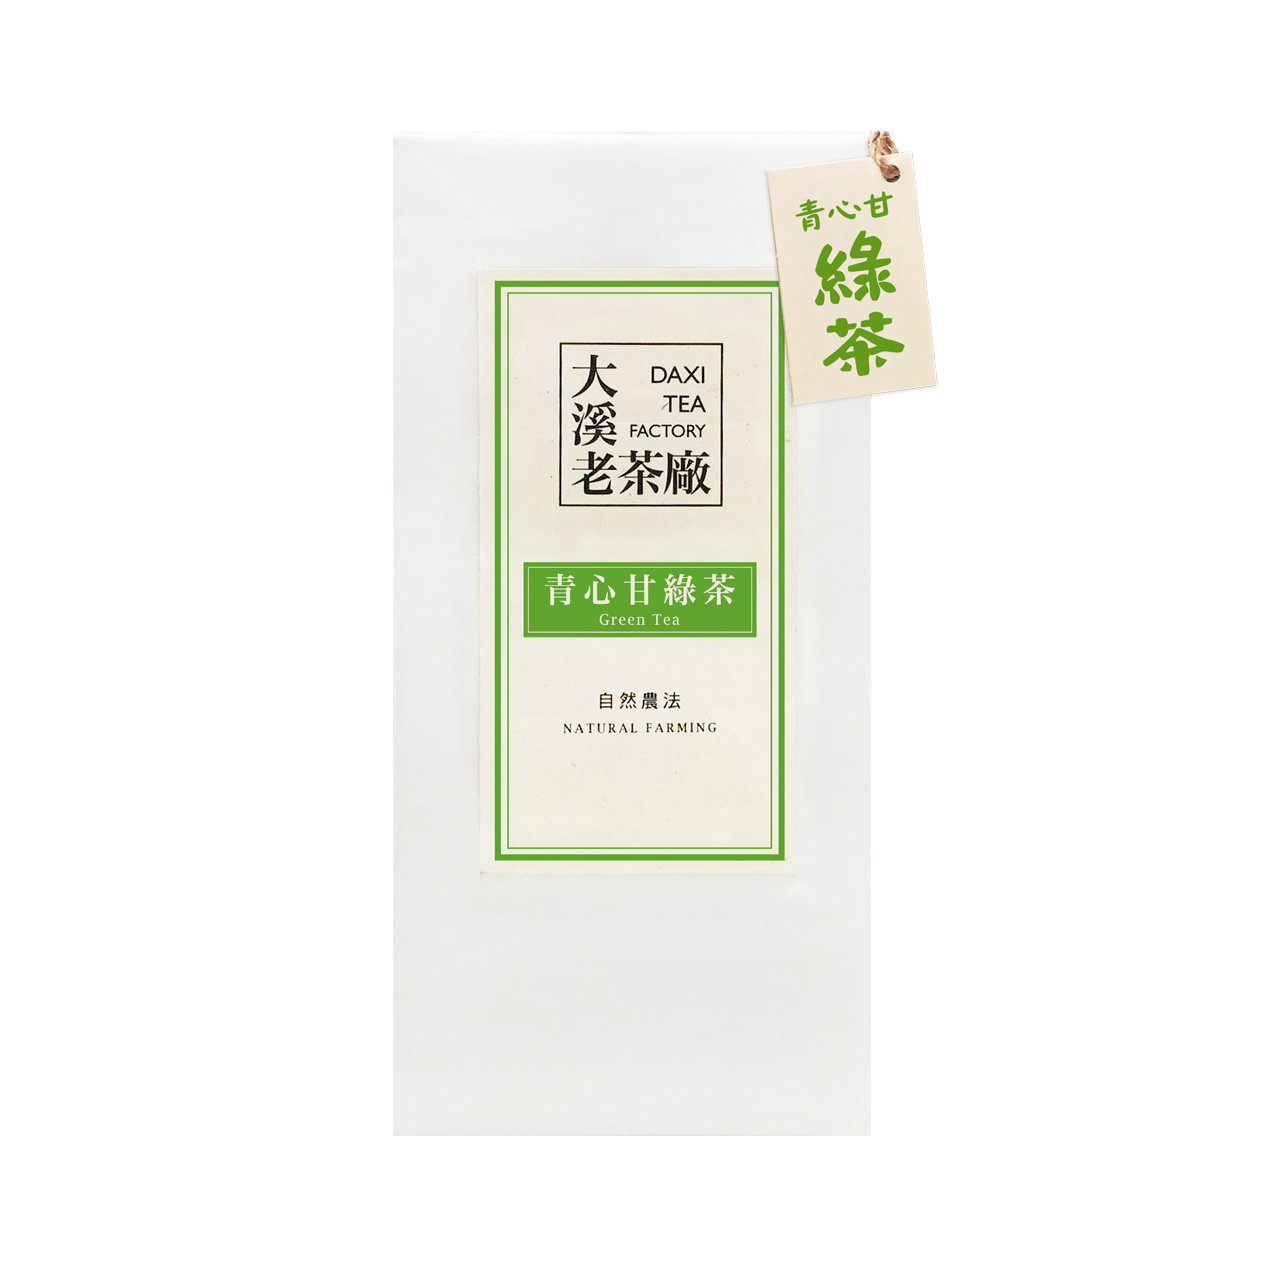 Daxi-Green Tea (Refill)(Natural Farming)